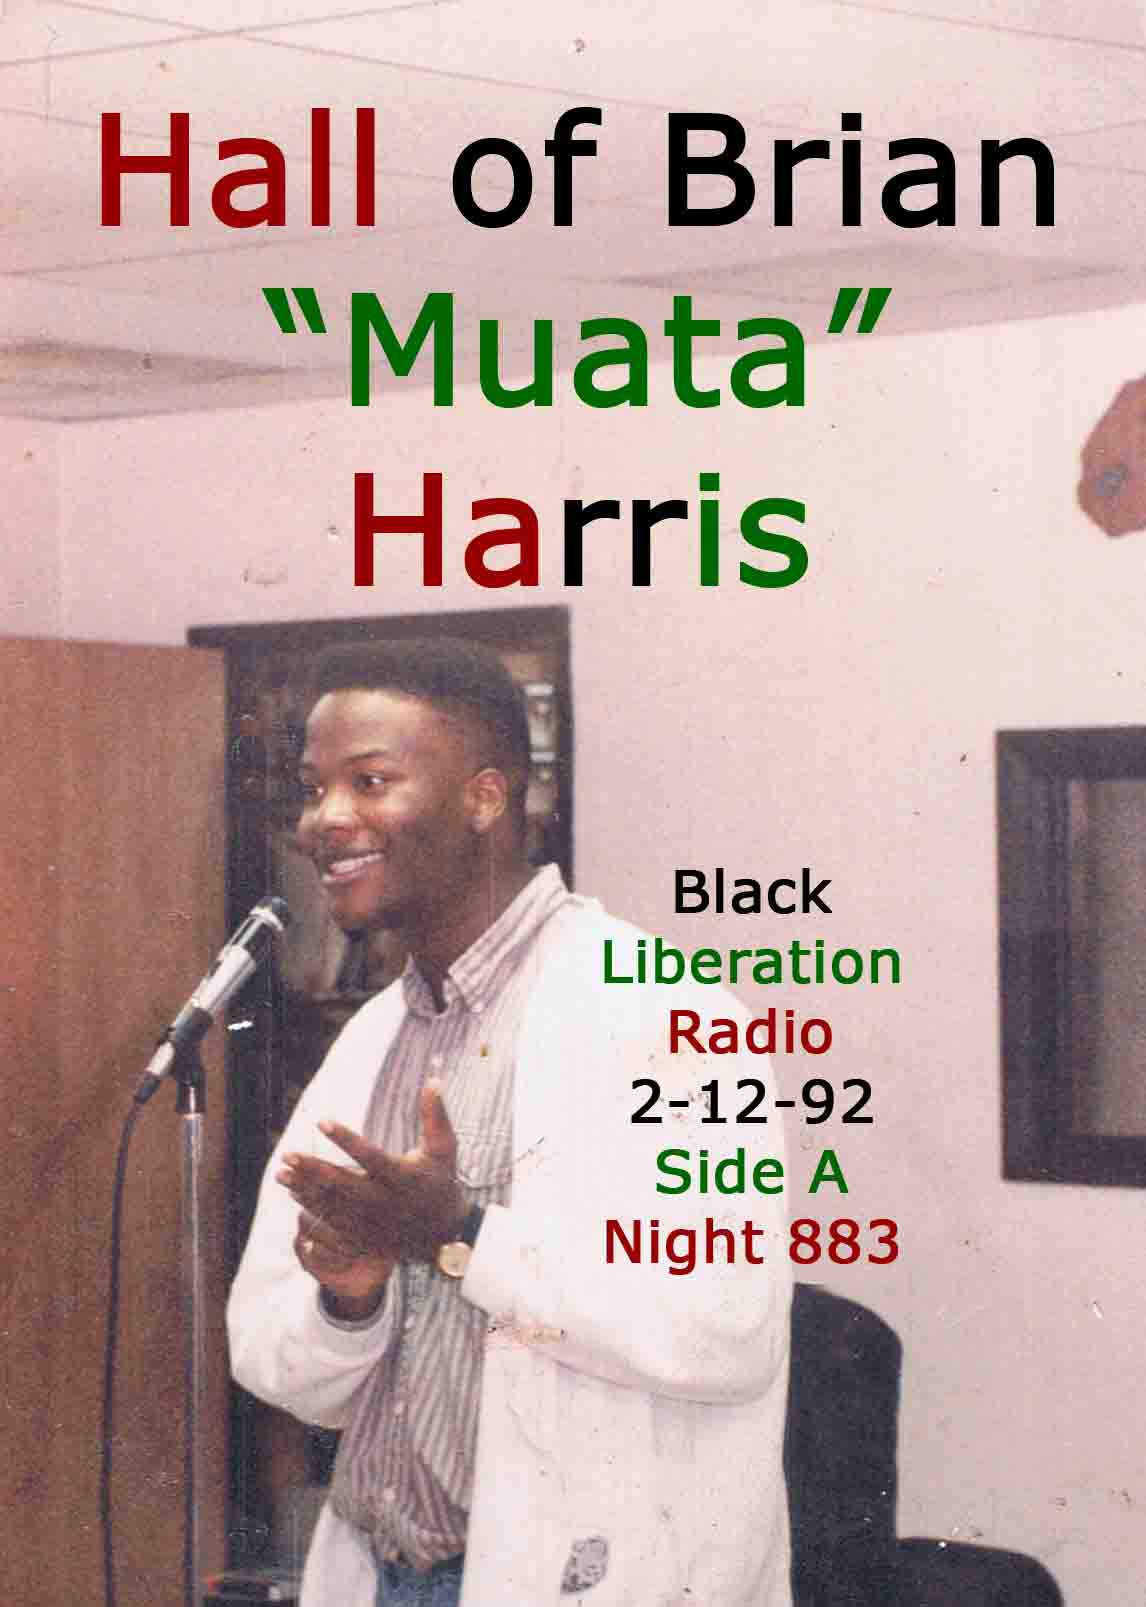 Black Liberation Radio - 2-12-92 side A